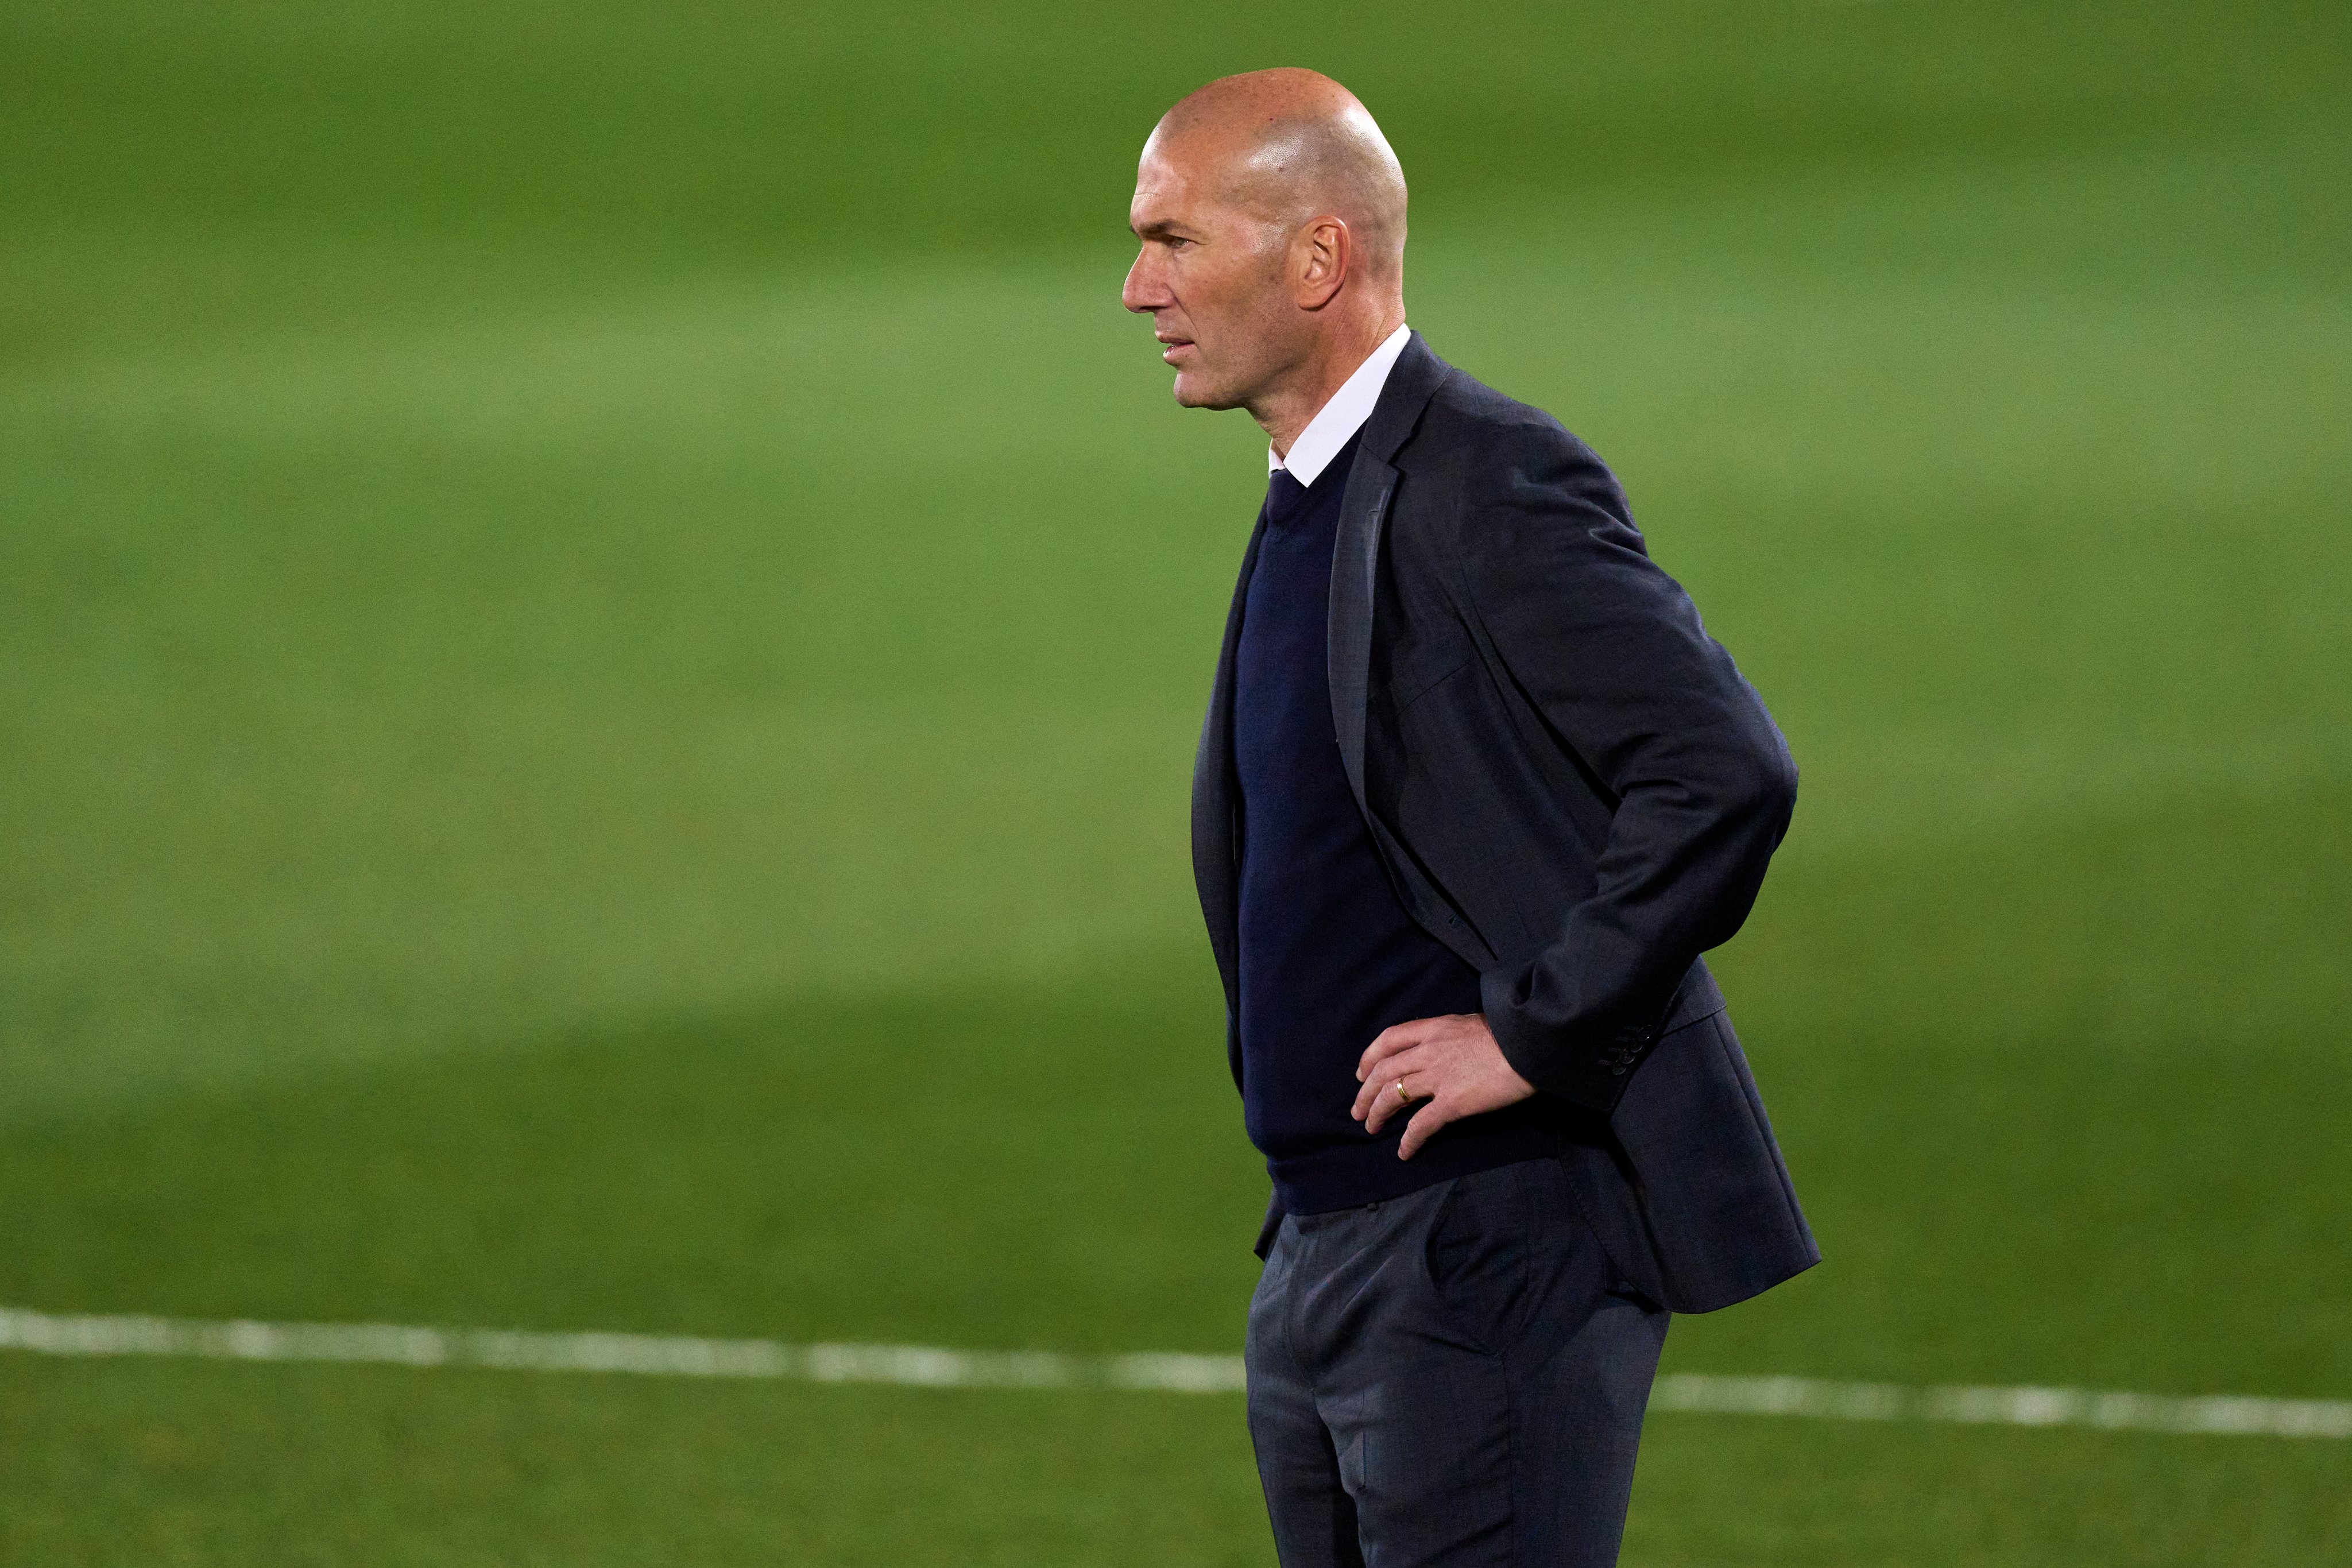 Wish Zinedine Zidane comes back to train a big French club, reveals Emmanuel Macron